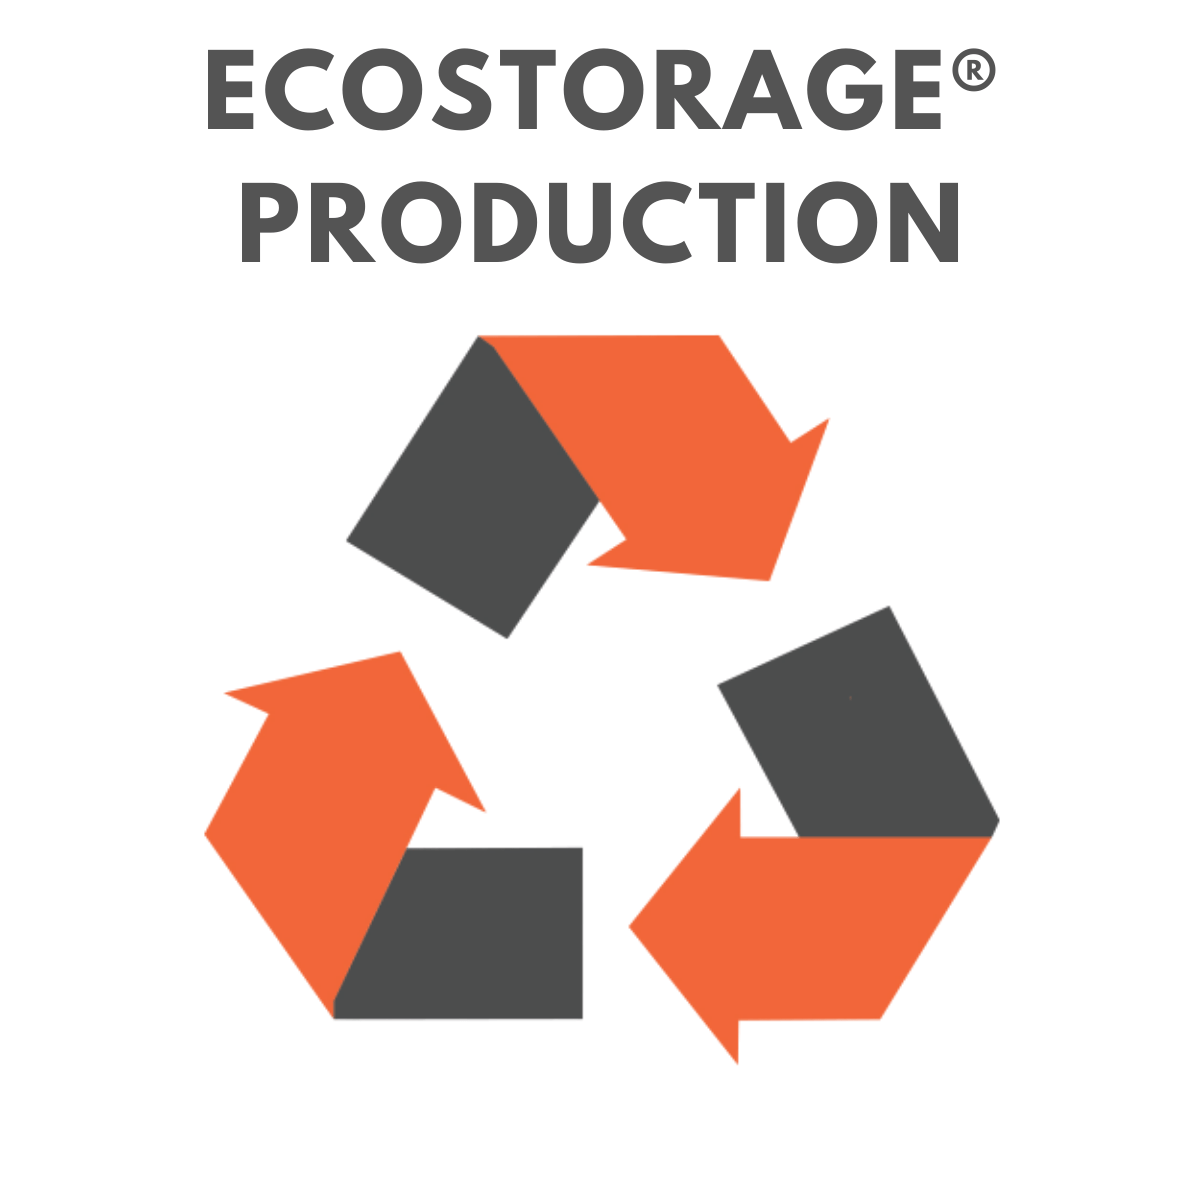 EcoStorage® Production